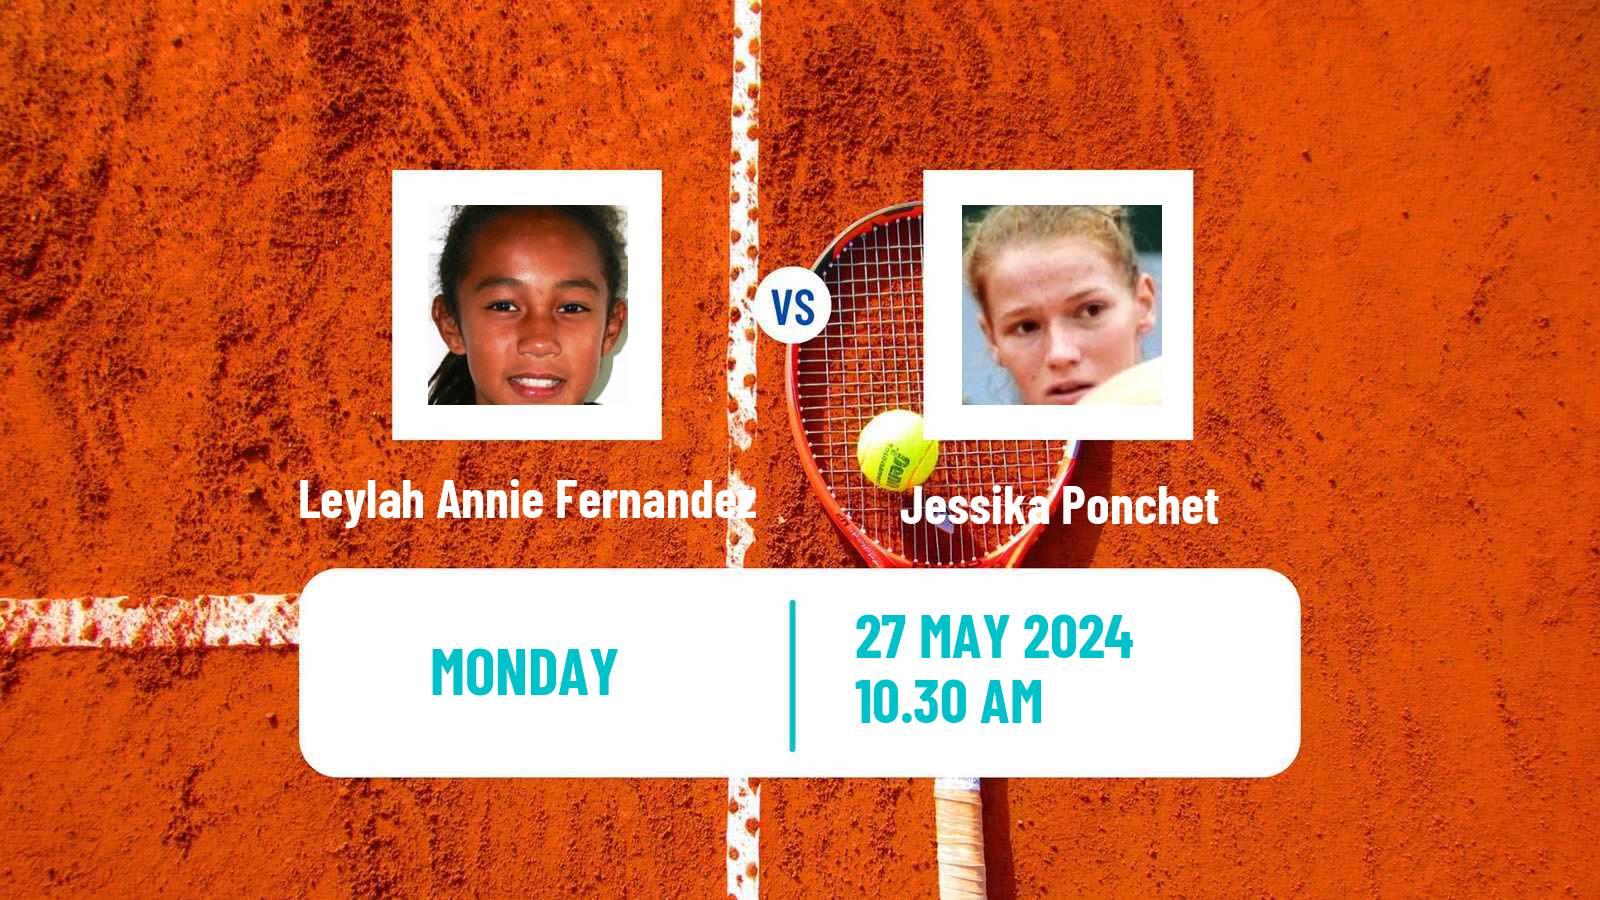 Tennis WTA Roland Garros Leylah Annie Fernandez - Jessika Ponchet